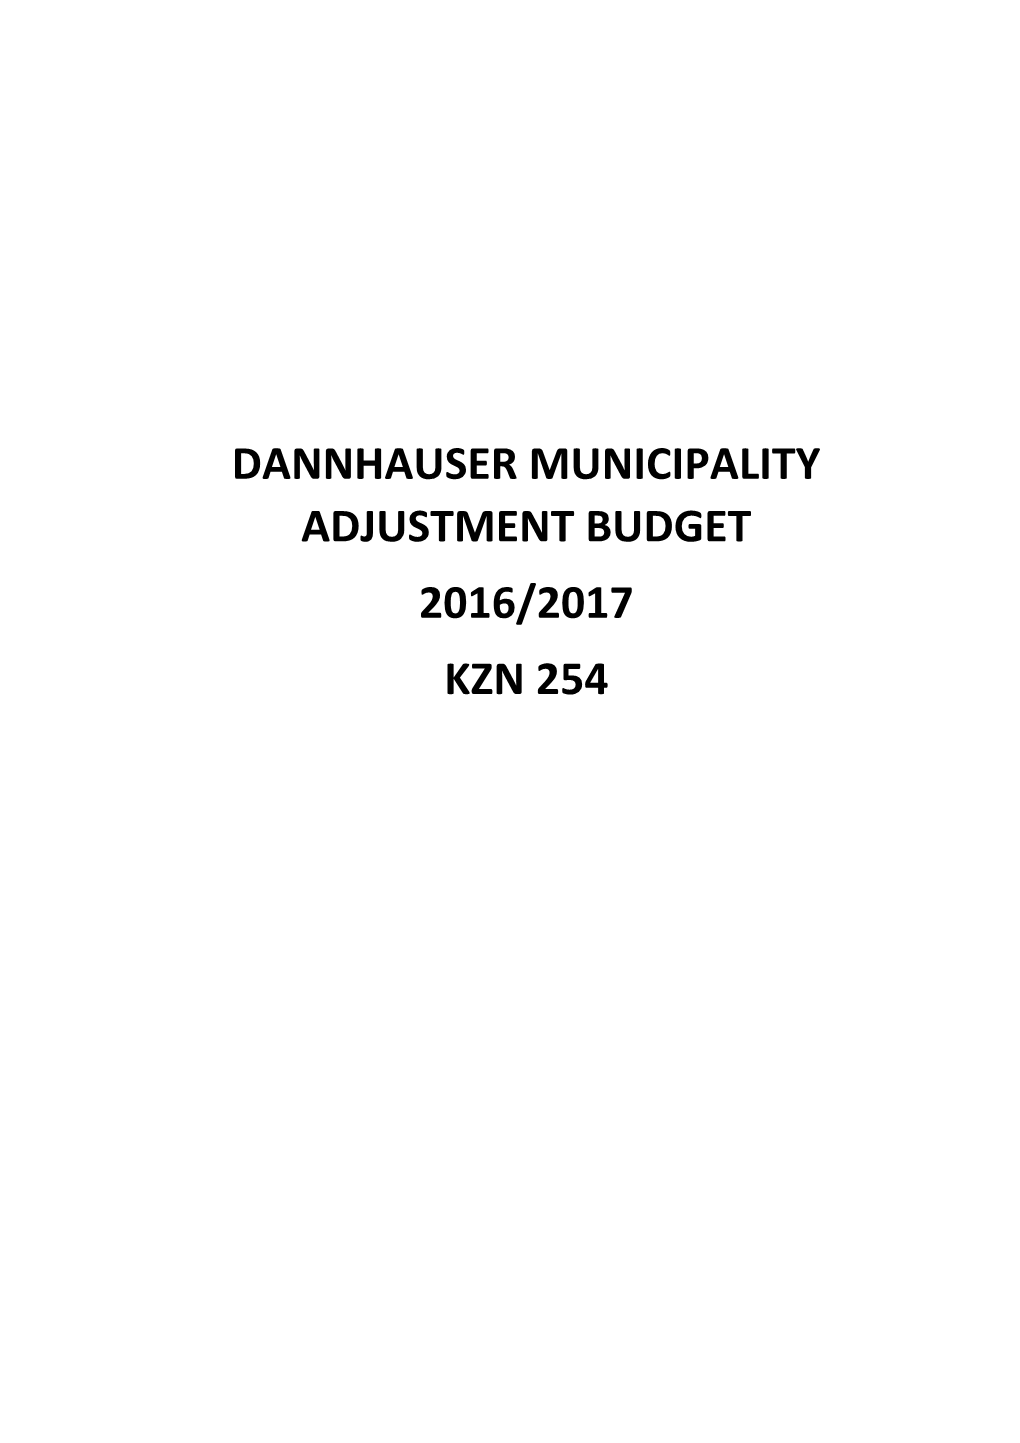 Dannhauser Municipality Adjustment Budget